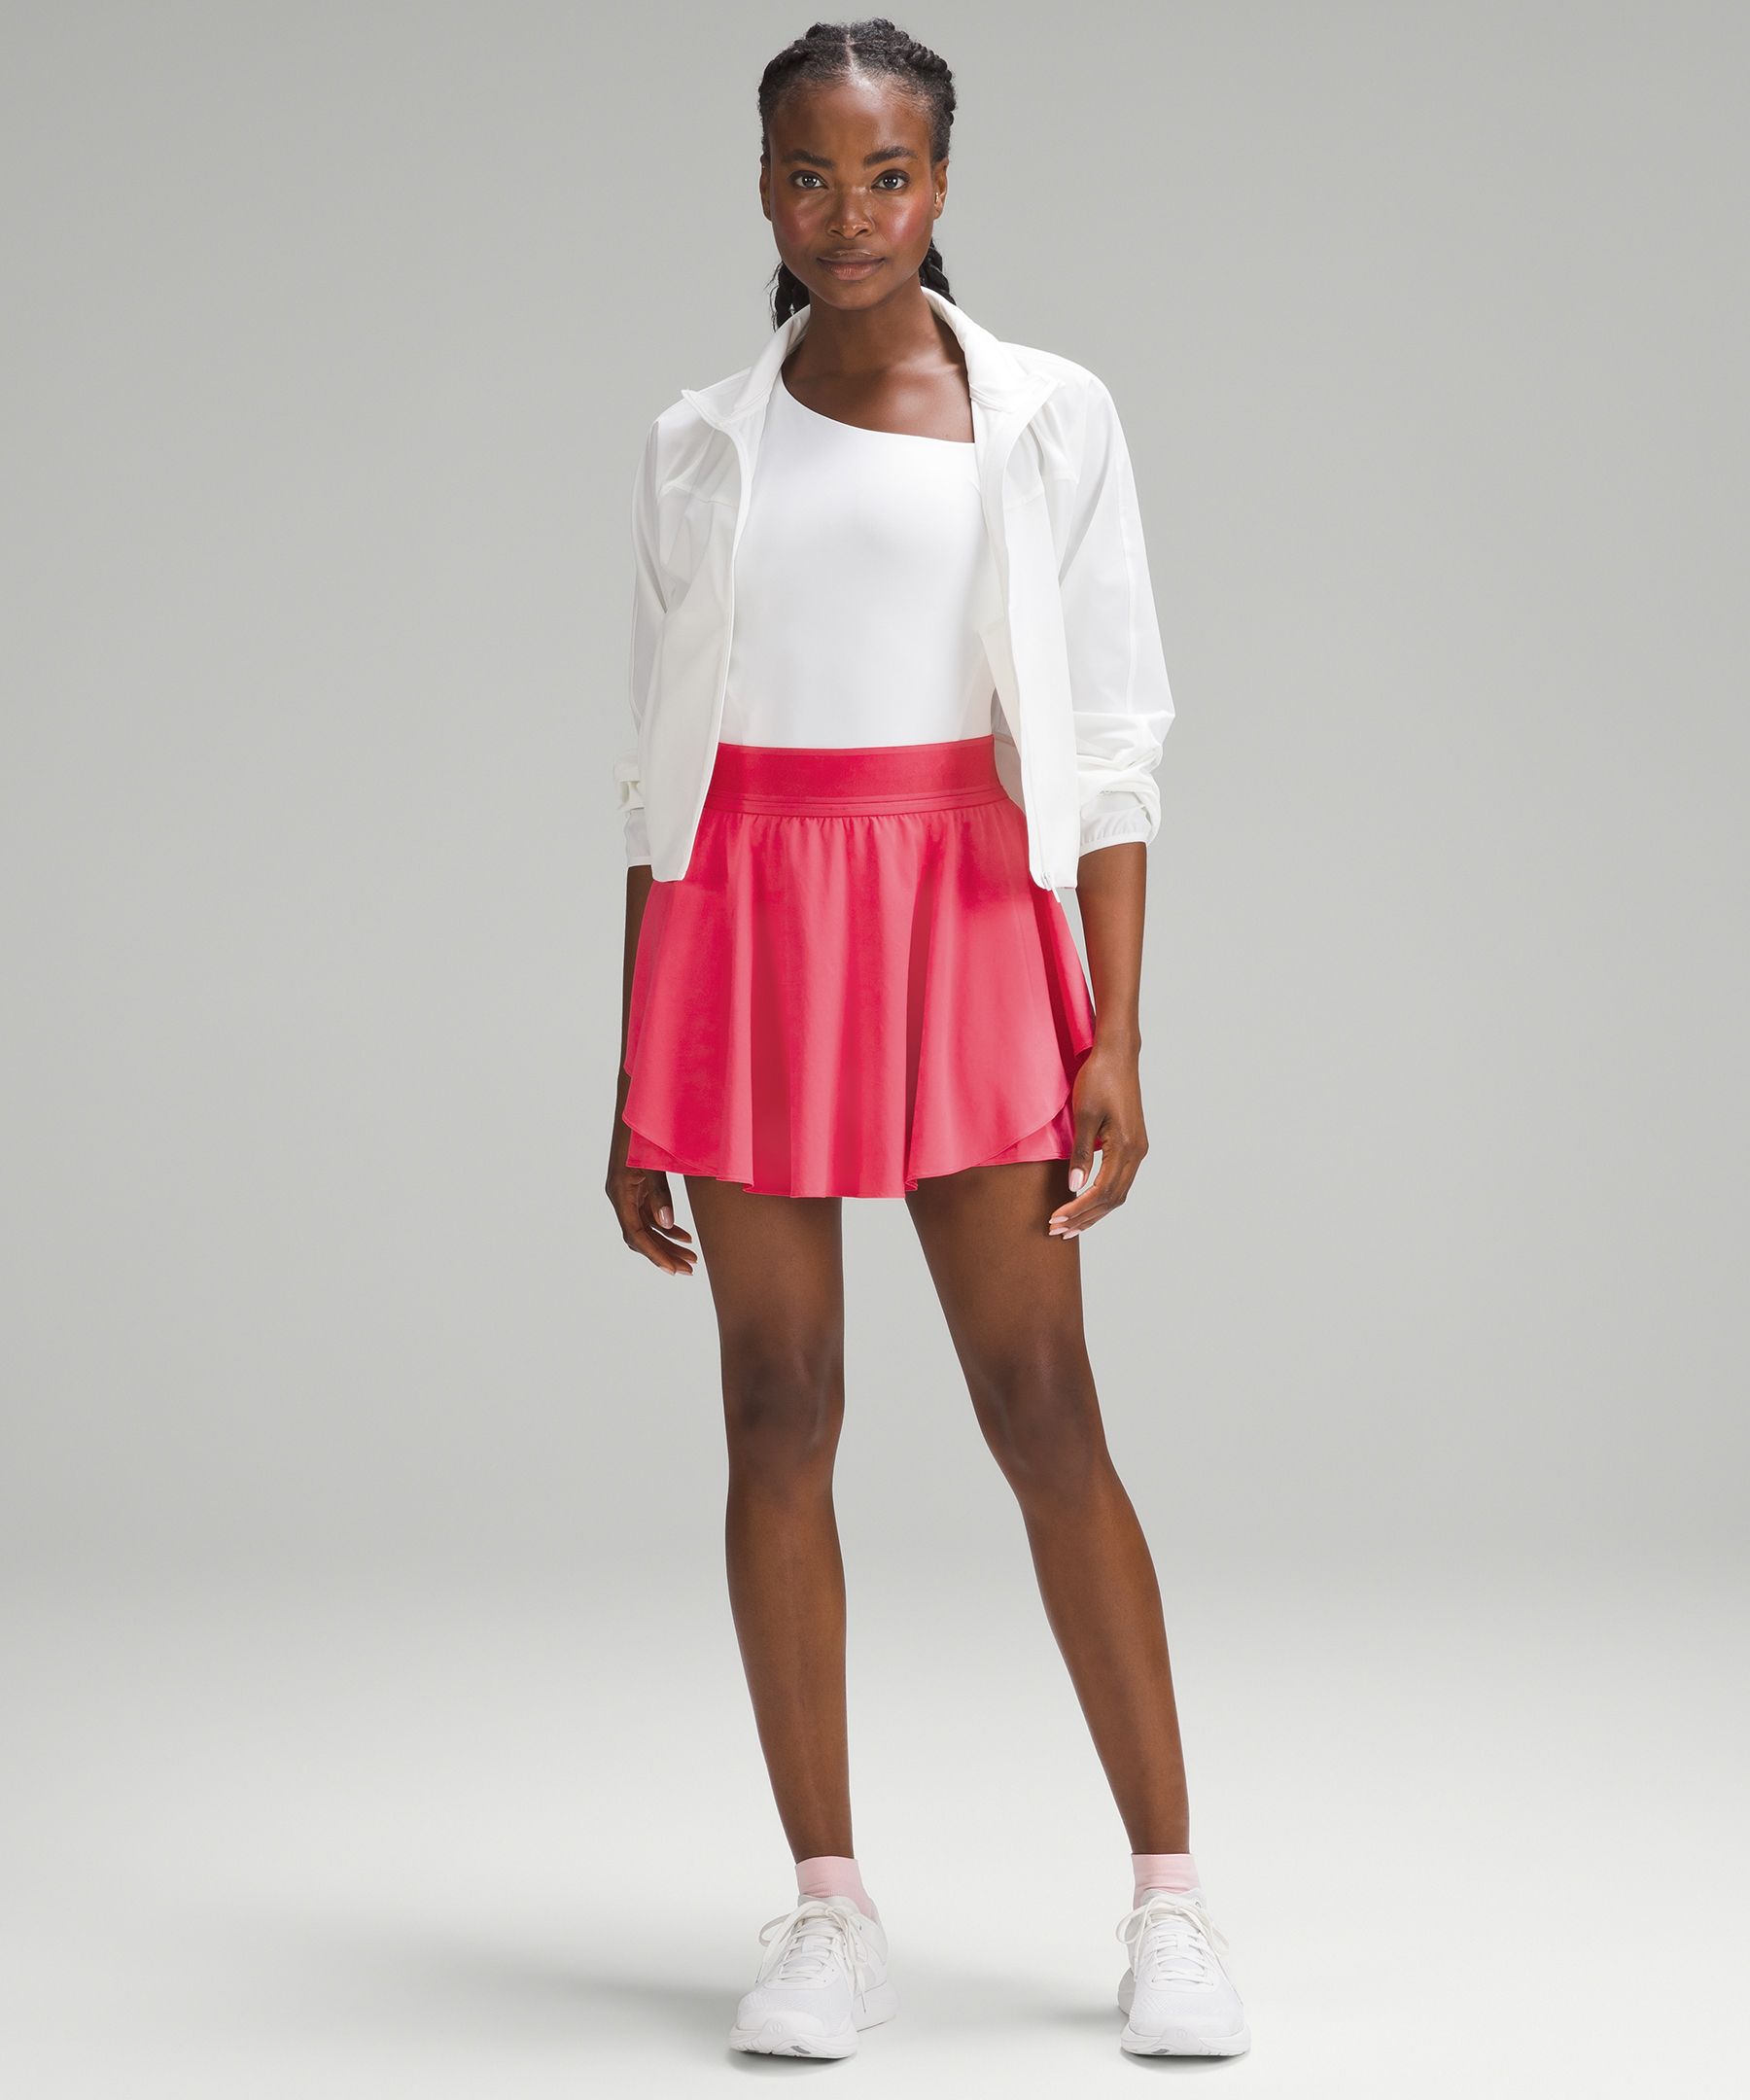 Asymmetrical pleated tennis skirt white (size 0)… unfortunately I love this  : r/lululemon